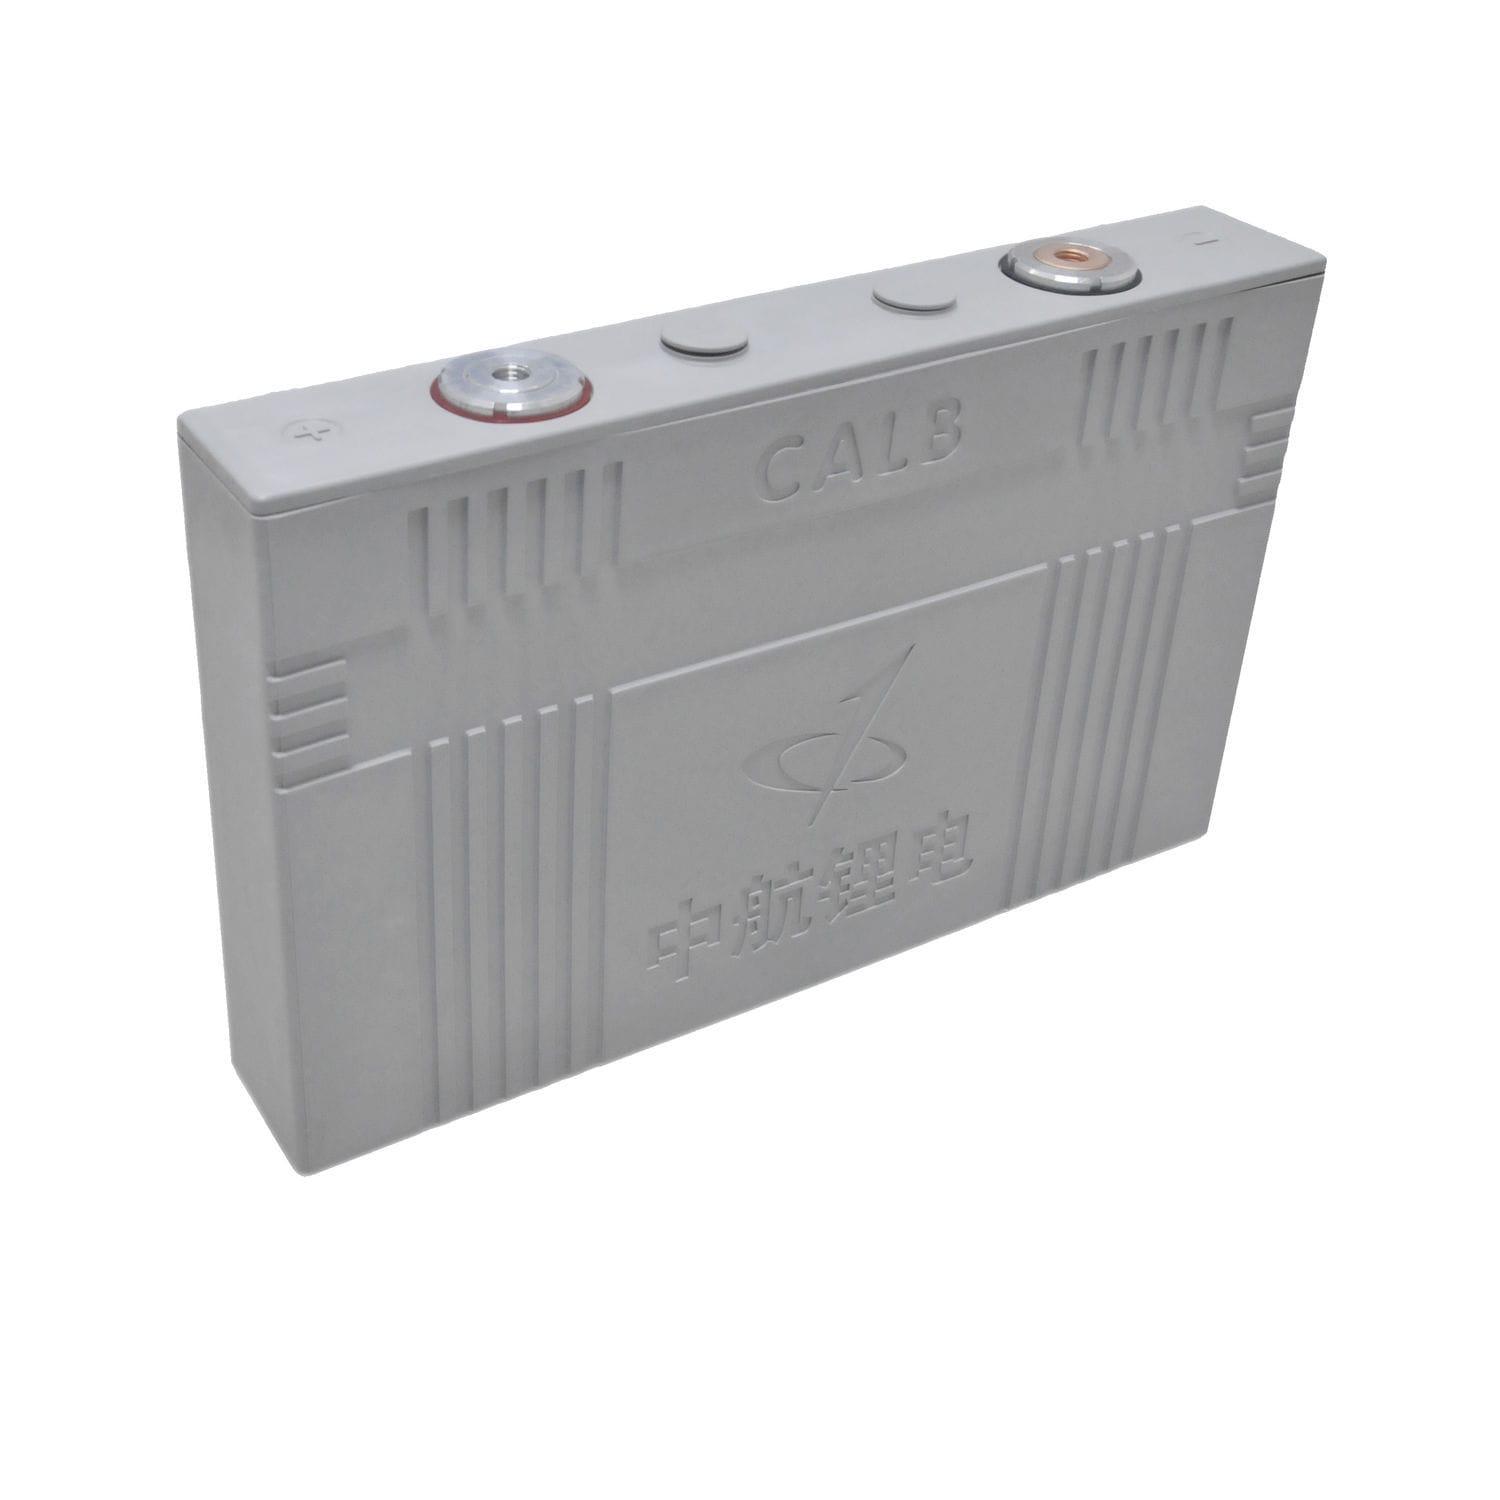 CALB CA400 3.2V 400Ah LiFePO4 Lihtium ion Battery